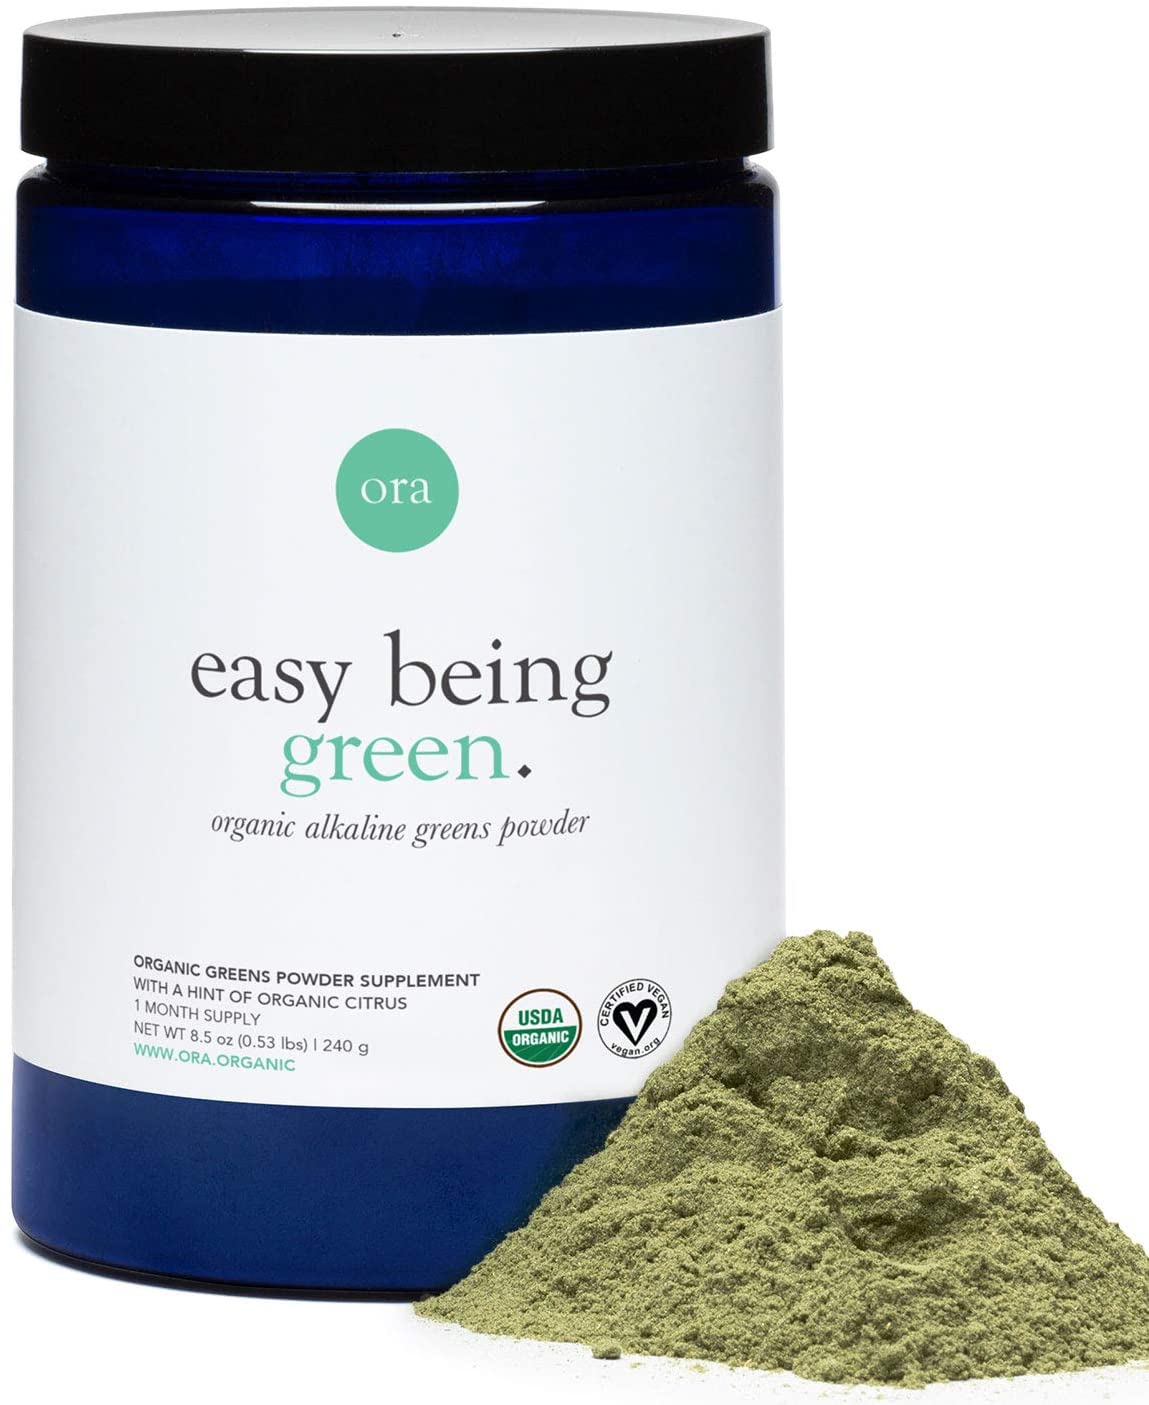 Ora Organic - Organic alkaline greens powder supplement - fruit and vegetables supplements - top 10 organic supplements